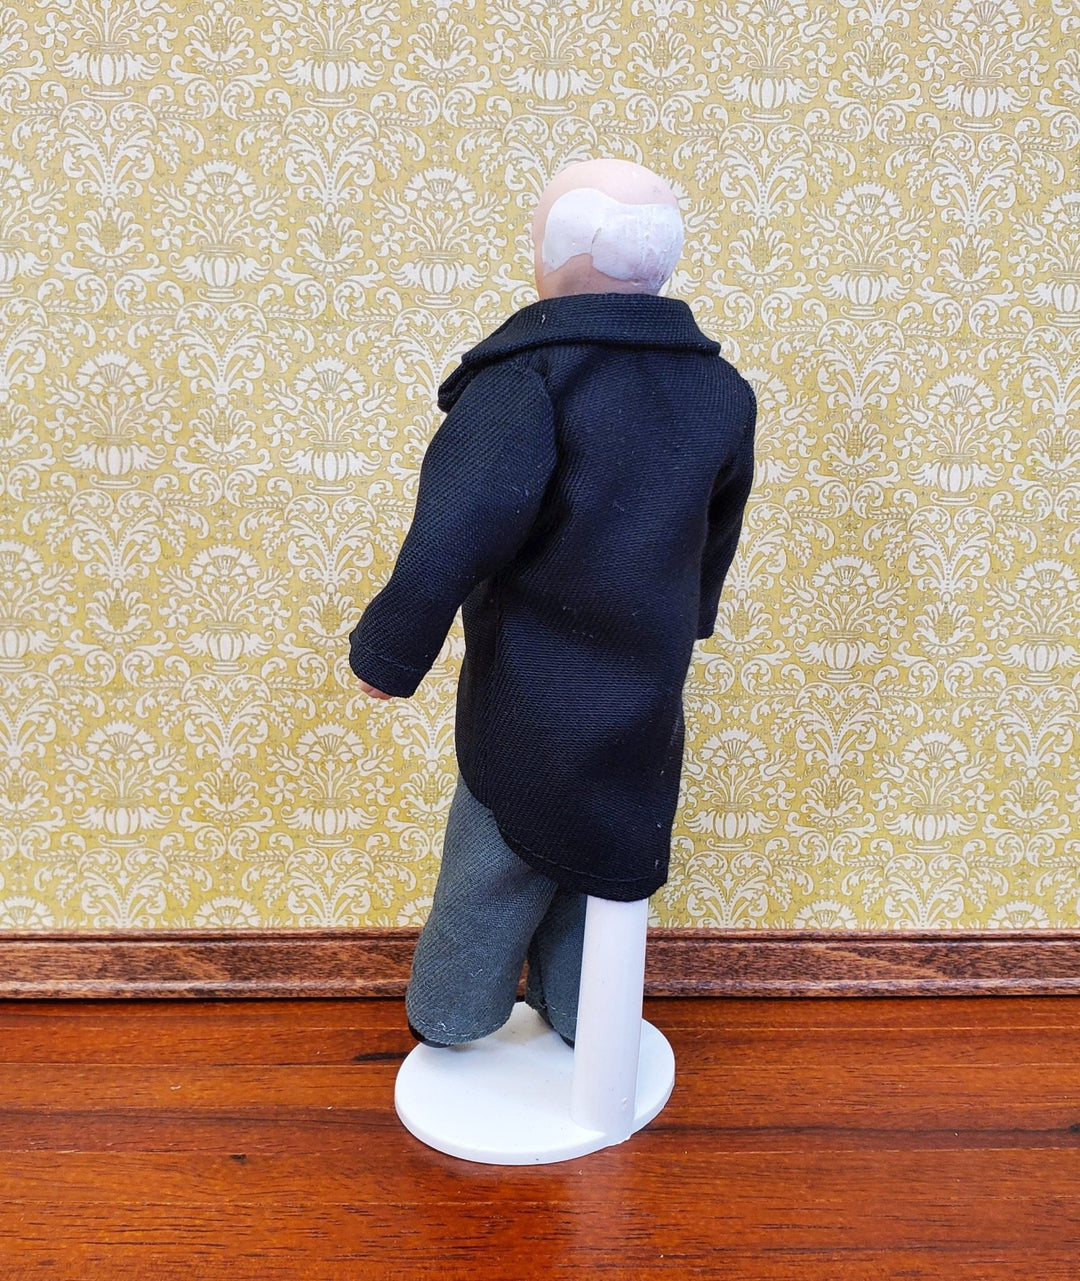 Dollhouse Grandfather or Butler Porcelain Male Poseable 1:12 Scale Miniature - Miniature Crush